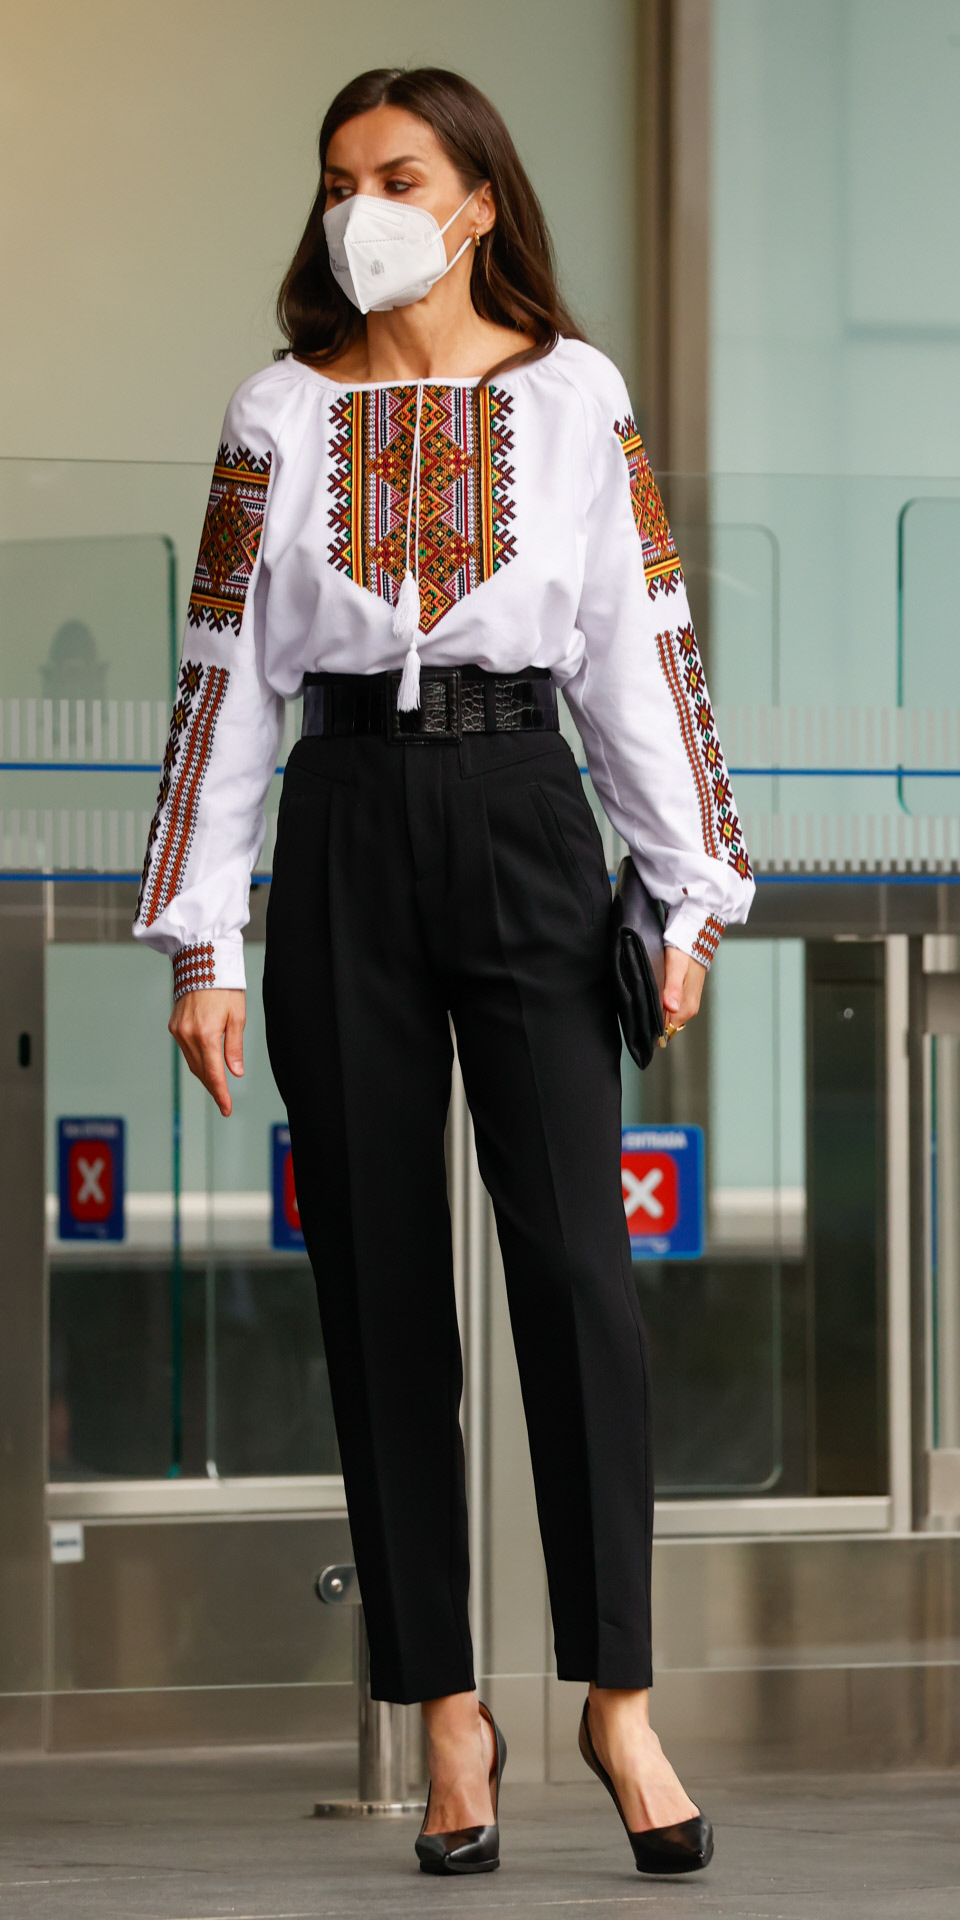 La reina Letizia muestra con su blusa su apoyo a Ucrania.